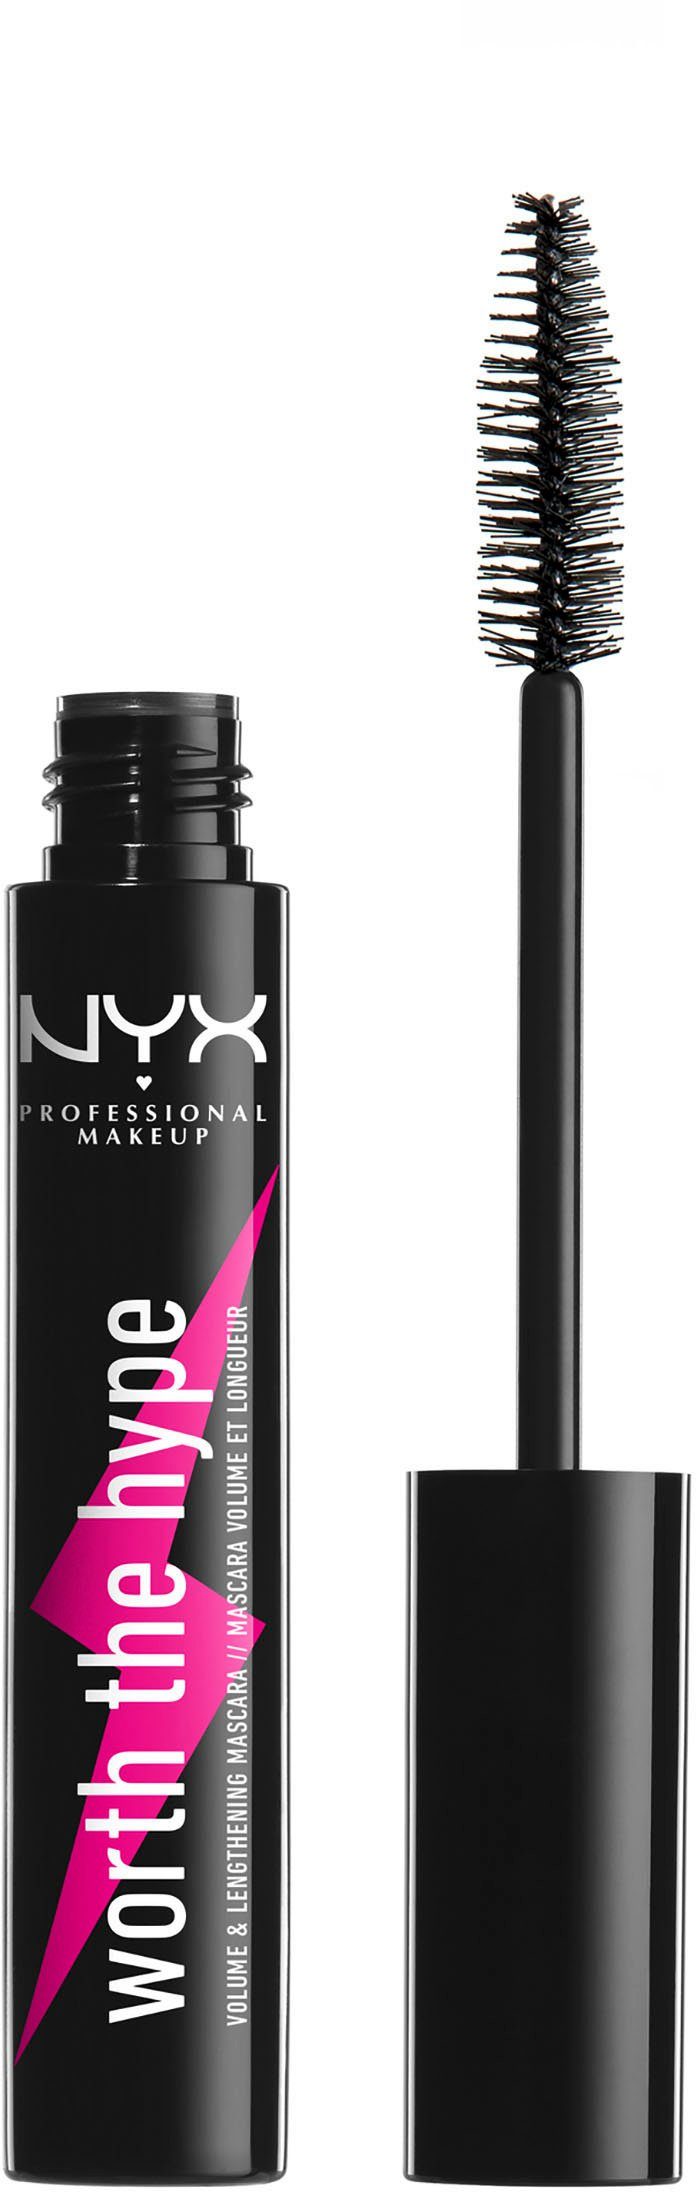 NYX Mascara Professional Makeup Worth Mascara The Hype